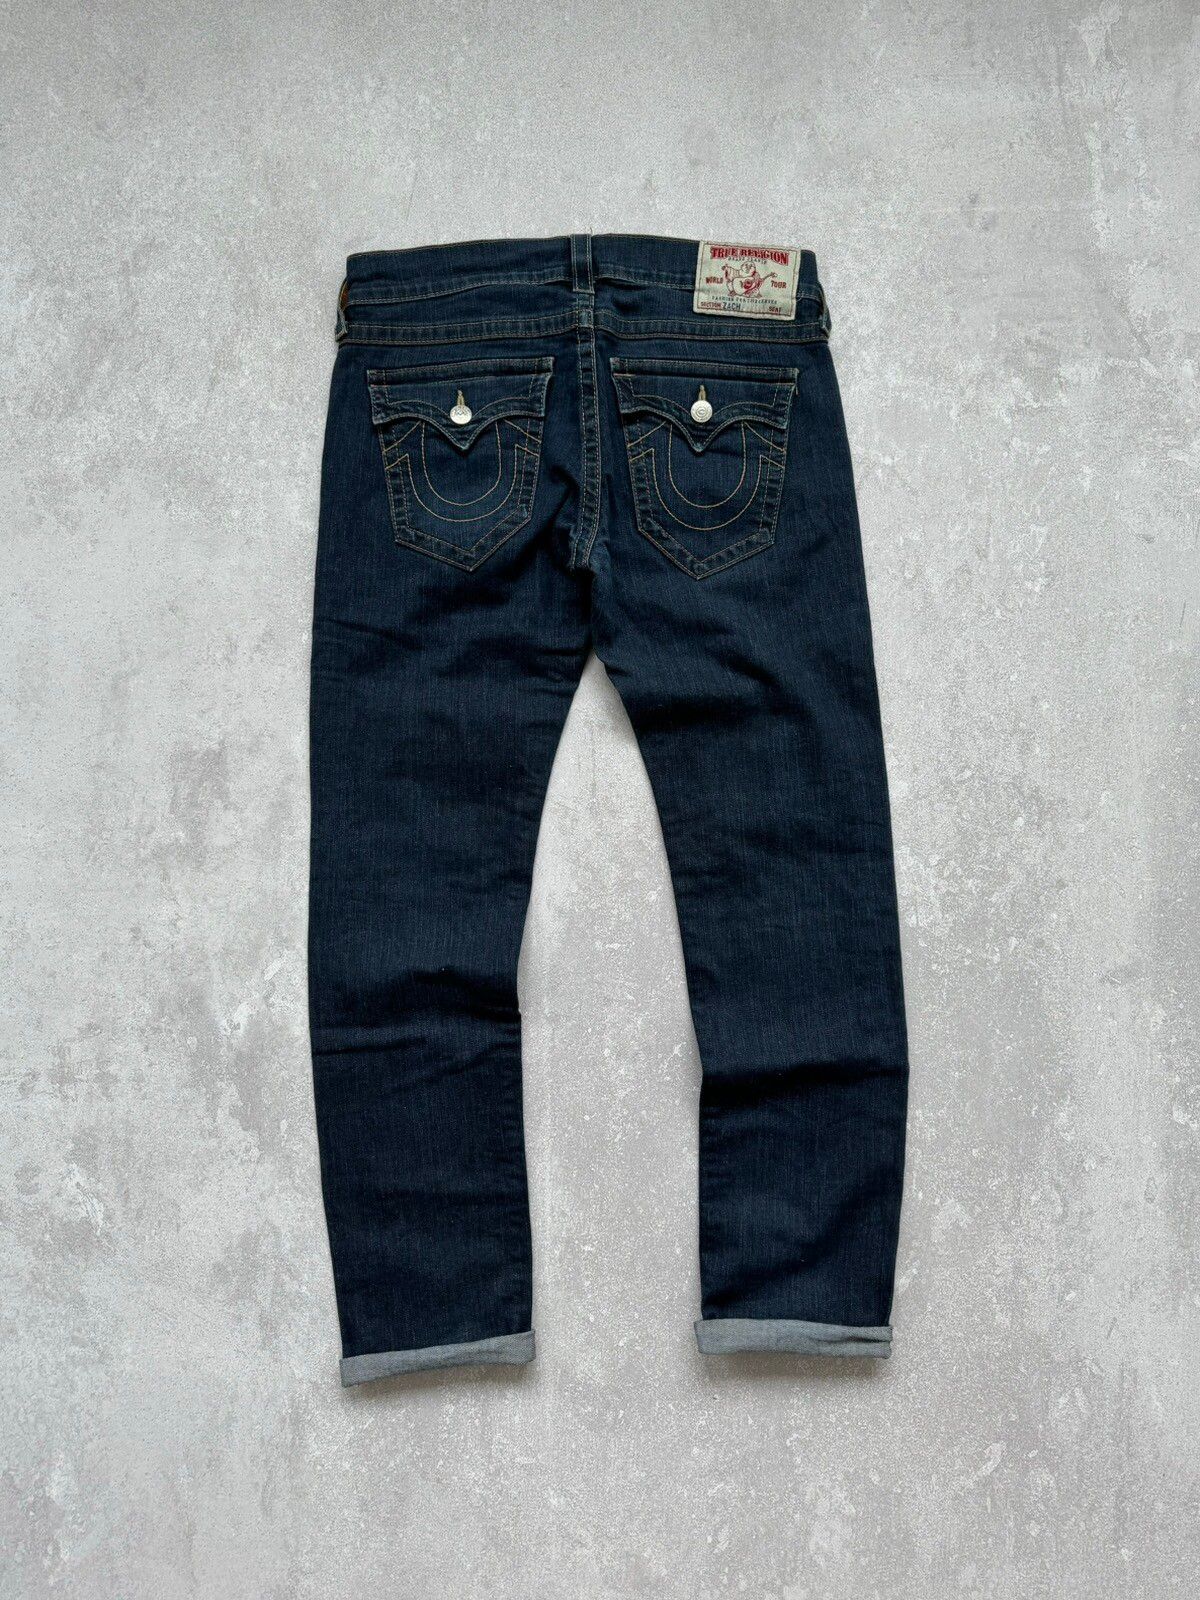 Pre-owned True Religion X Vintage True Religion Denim Jeans Zach Made In Usa Sz32 In Dark Blue